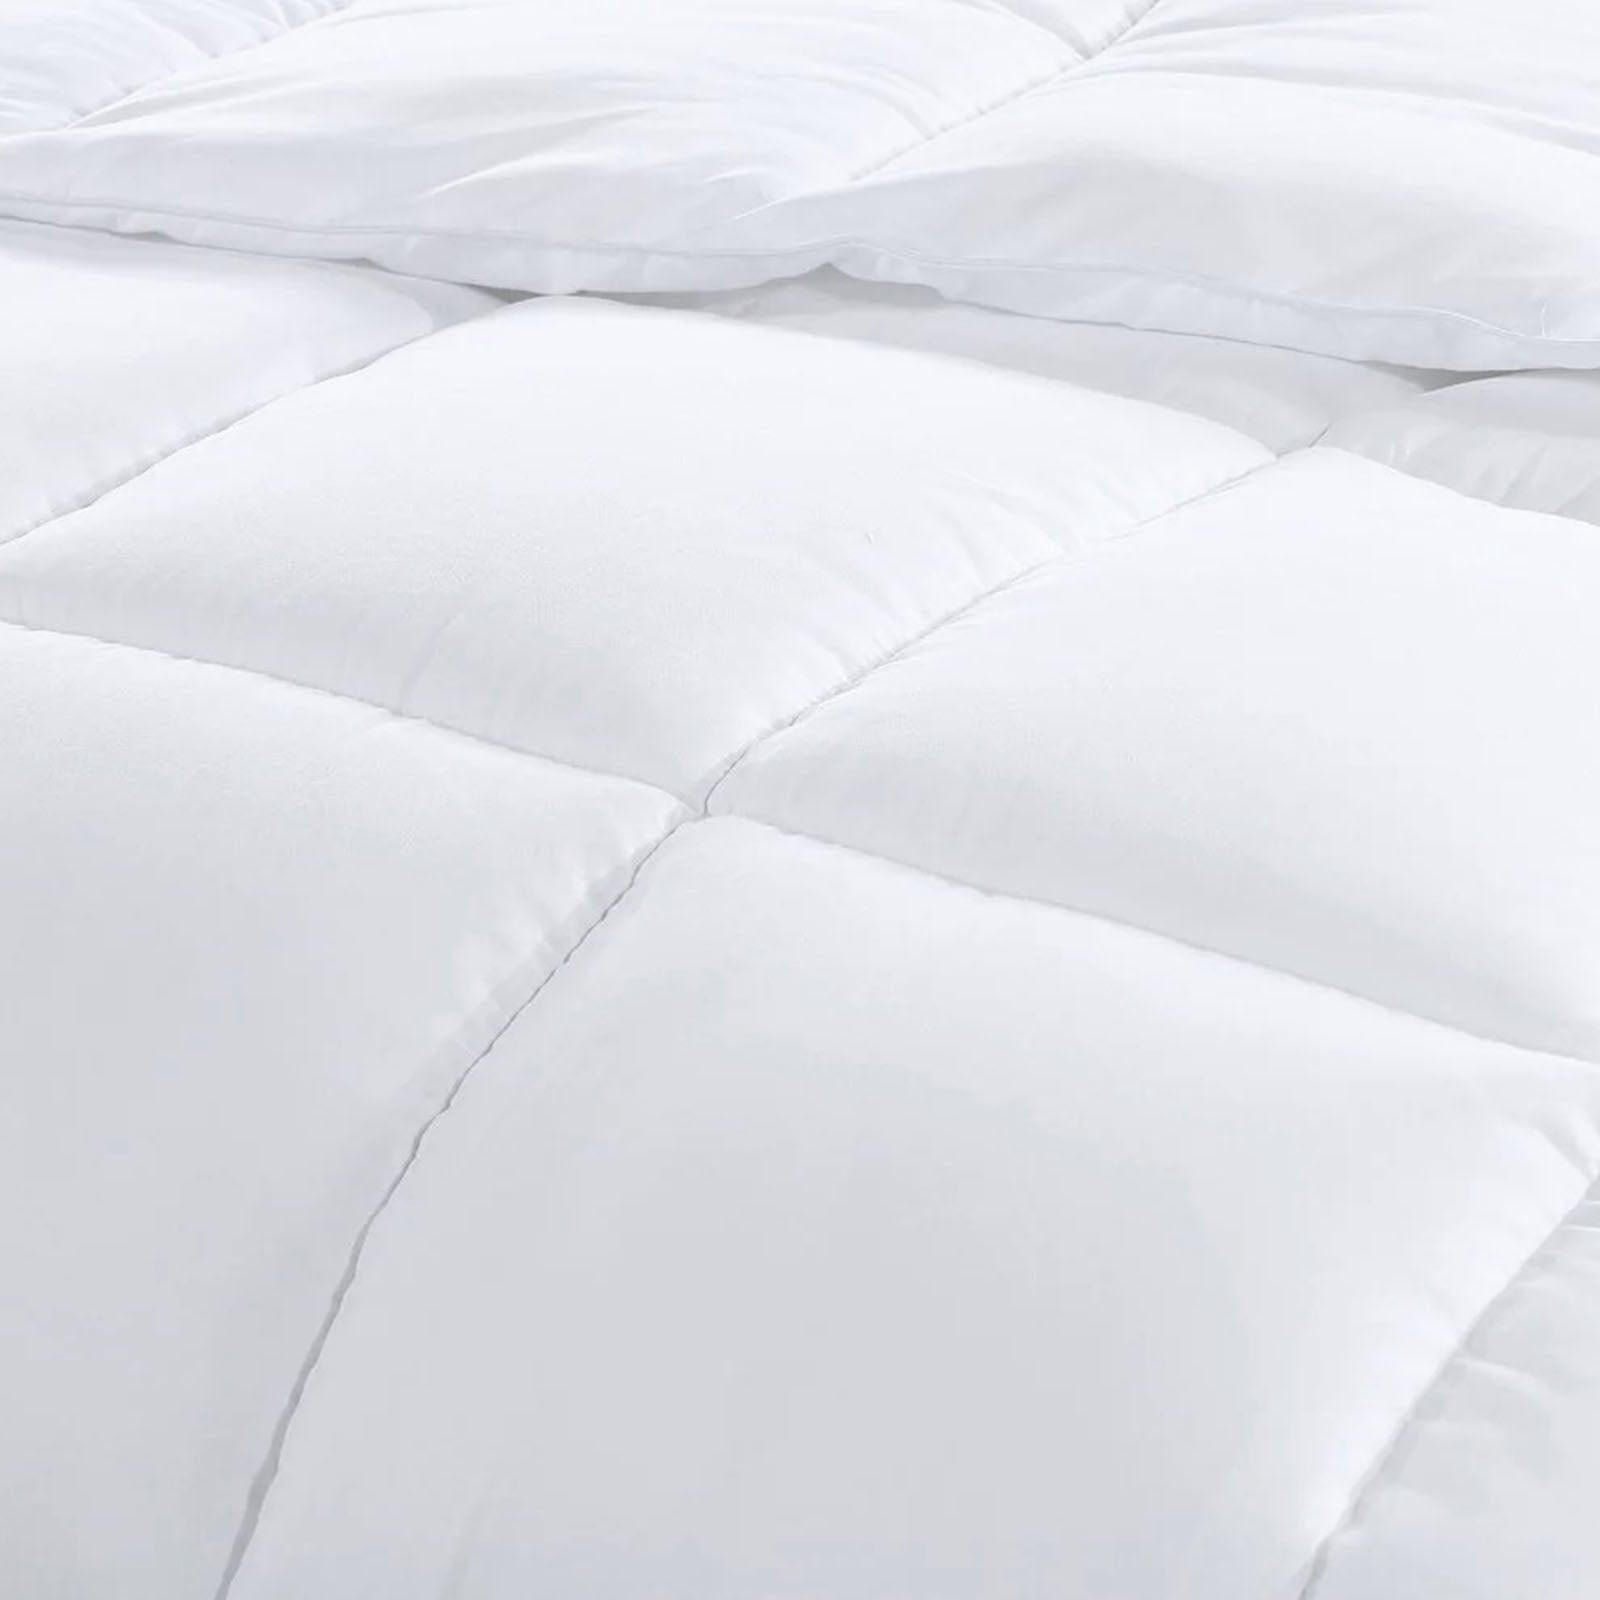 Royal Comfort Tencel Blend Quilt 300GSM Doona Eco Friendly Breathable All Season White Single Deals499